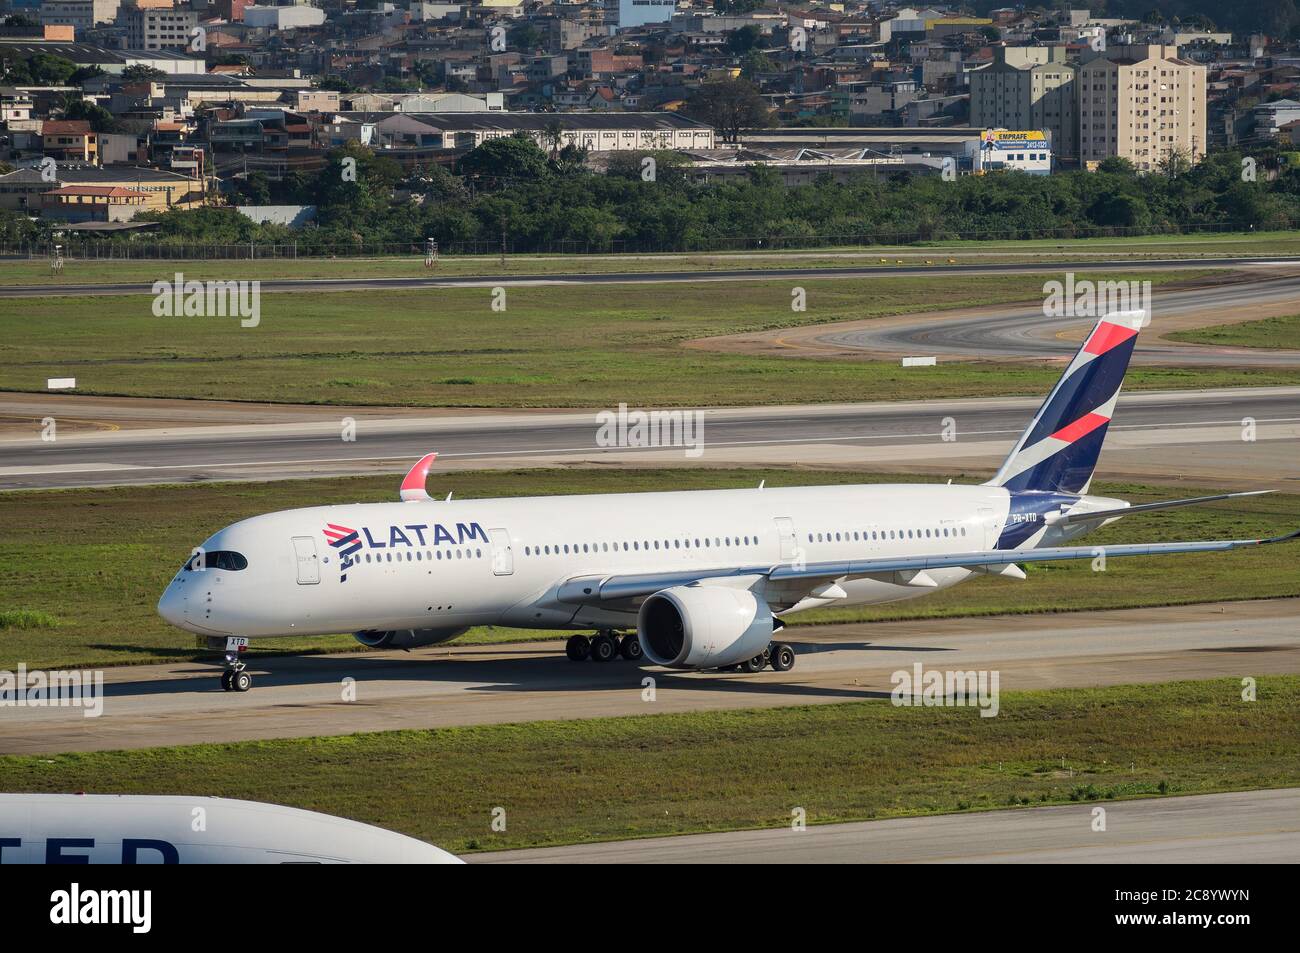 Latam Airlines Airbus 350-941 XWB (Long range wide-body aircraft - Reg. PT-XTD) taxing heading runway 27R of Sao Paulo/Guarulhos International Airport Stock Photo